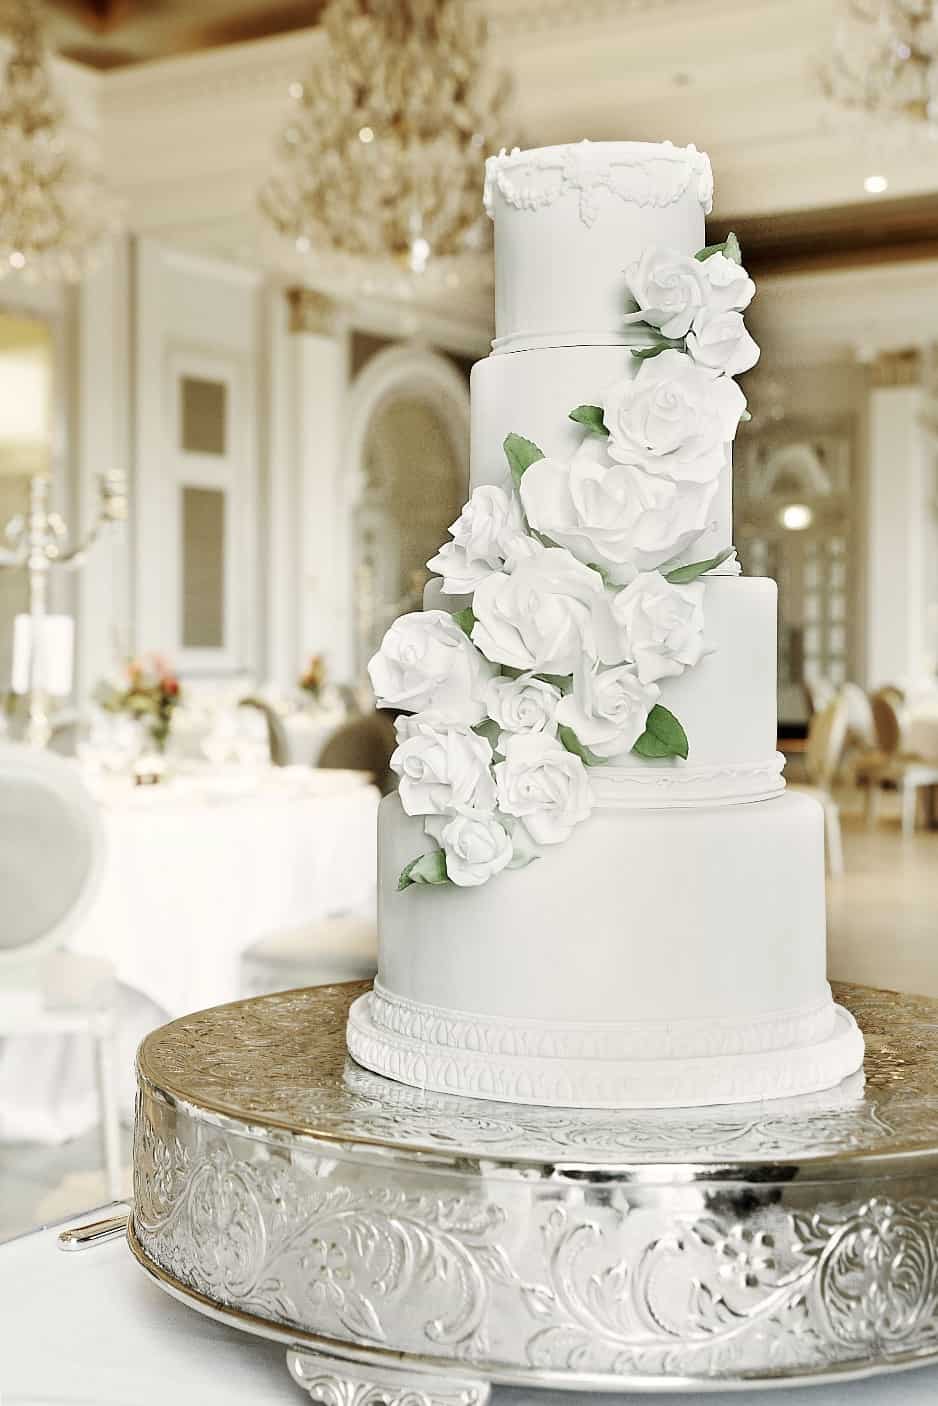 Adare Manor White Rose Wedding Cake MMCookies